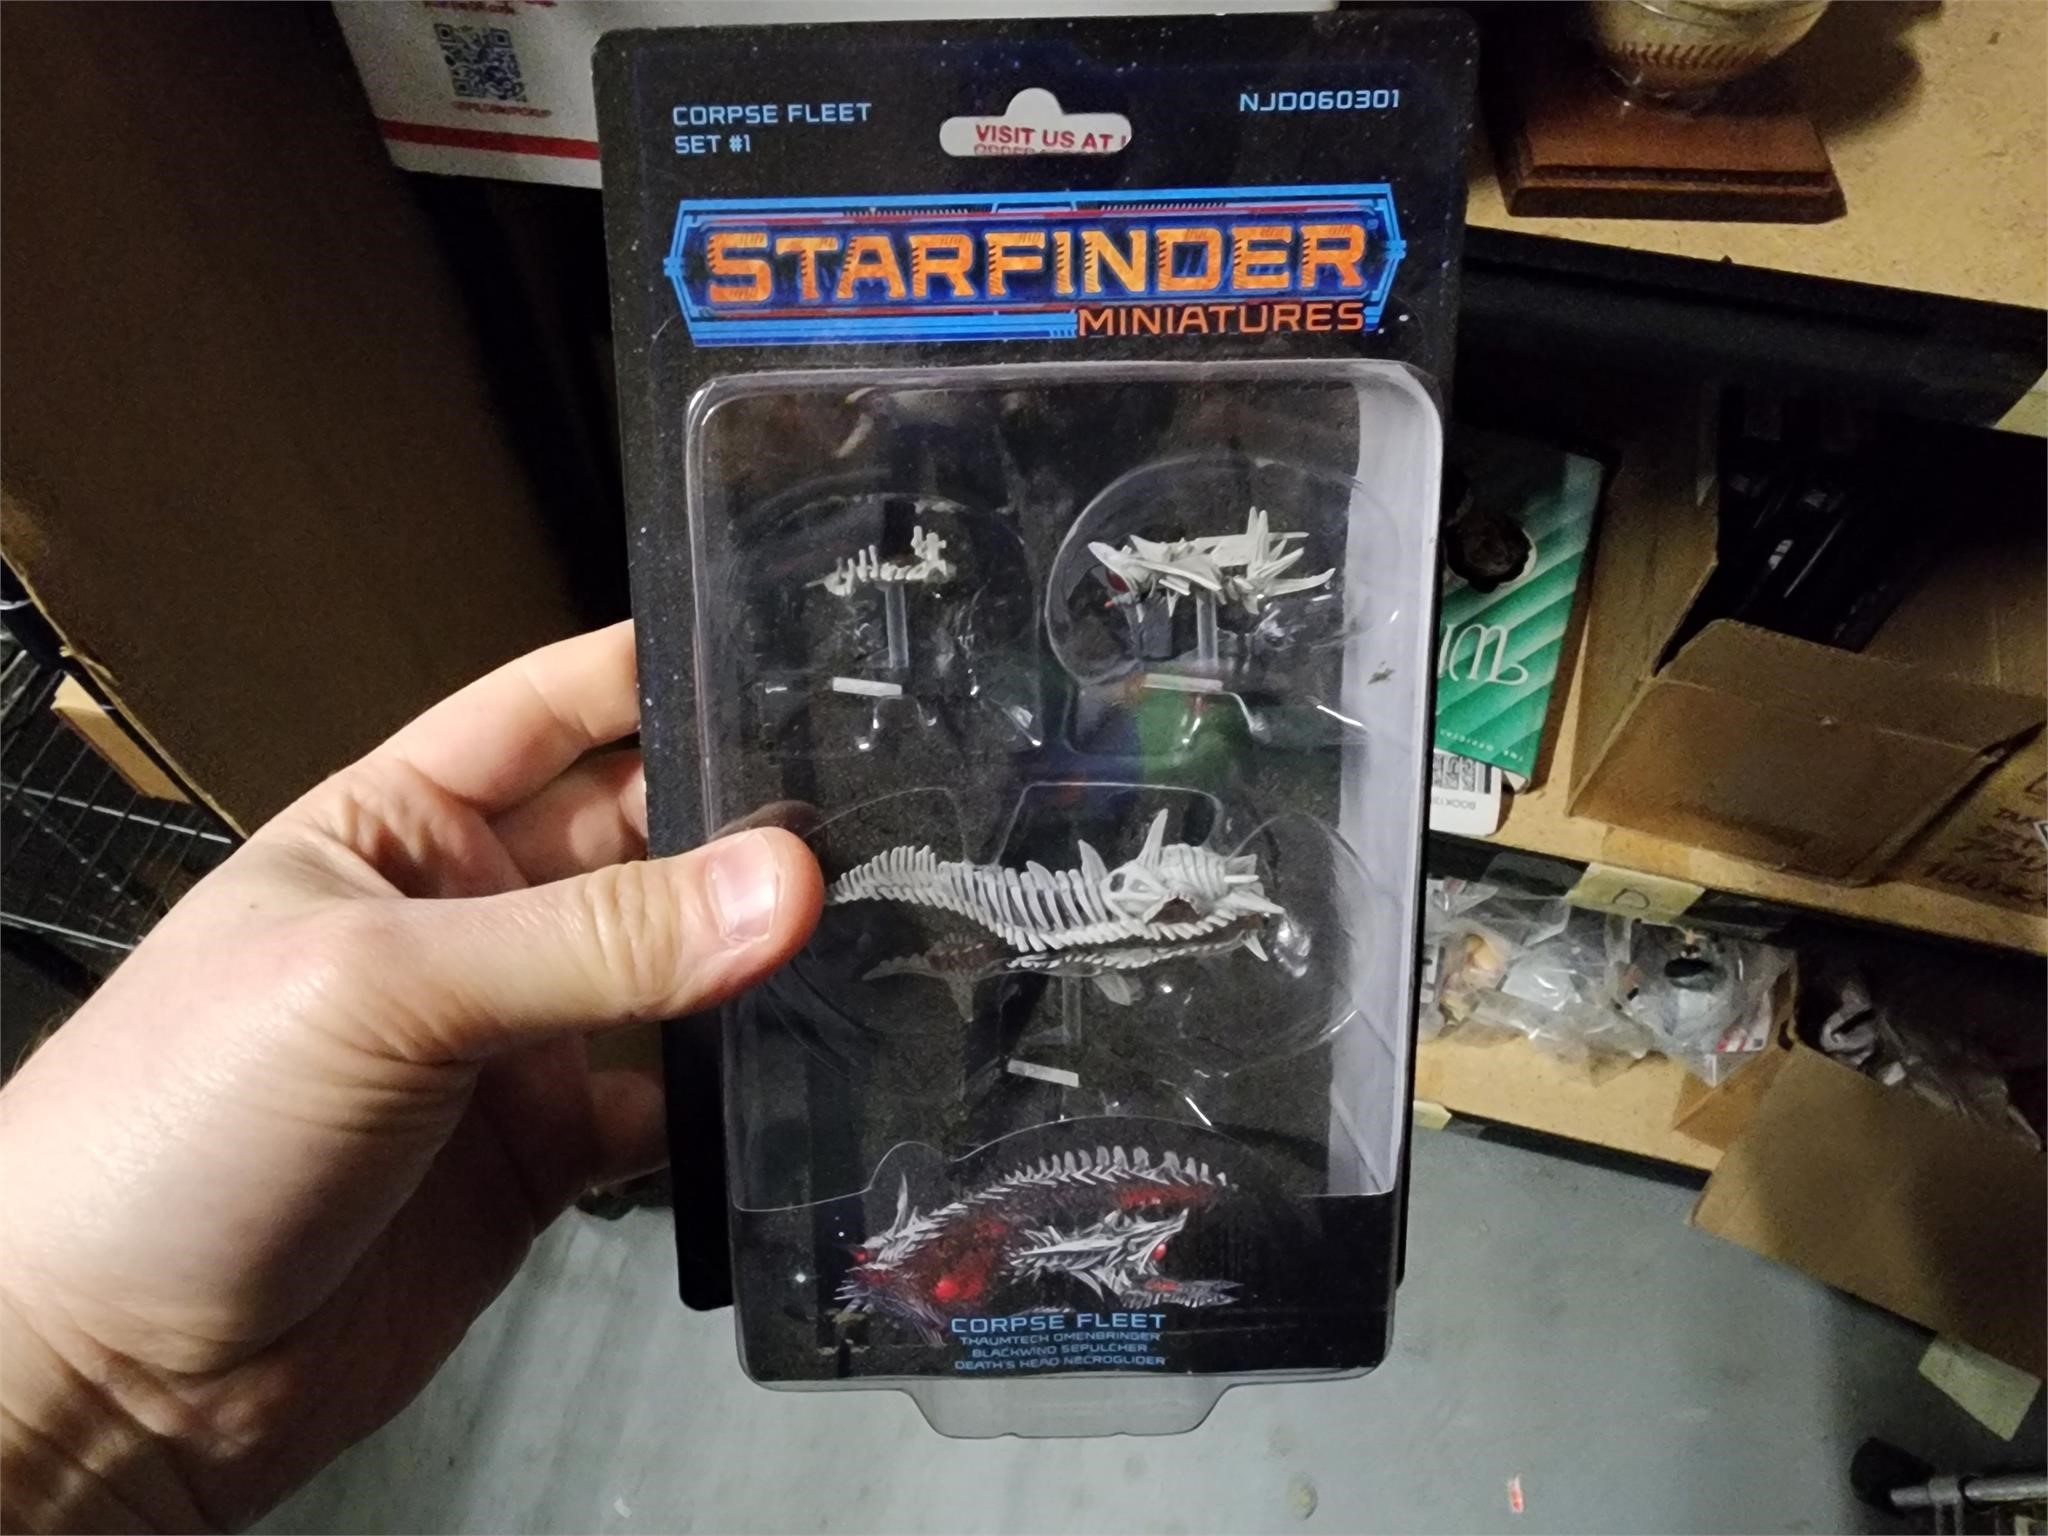 Starfinder Miniatures Corpse Fleet Set #1